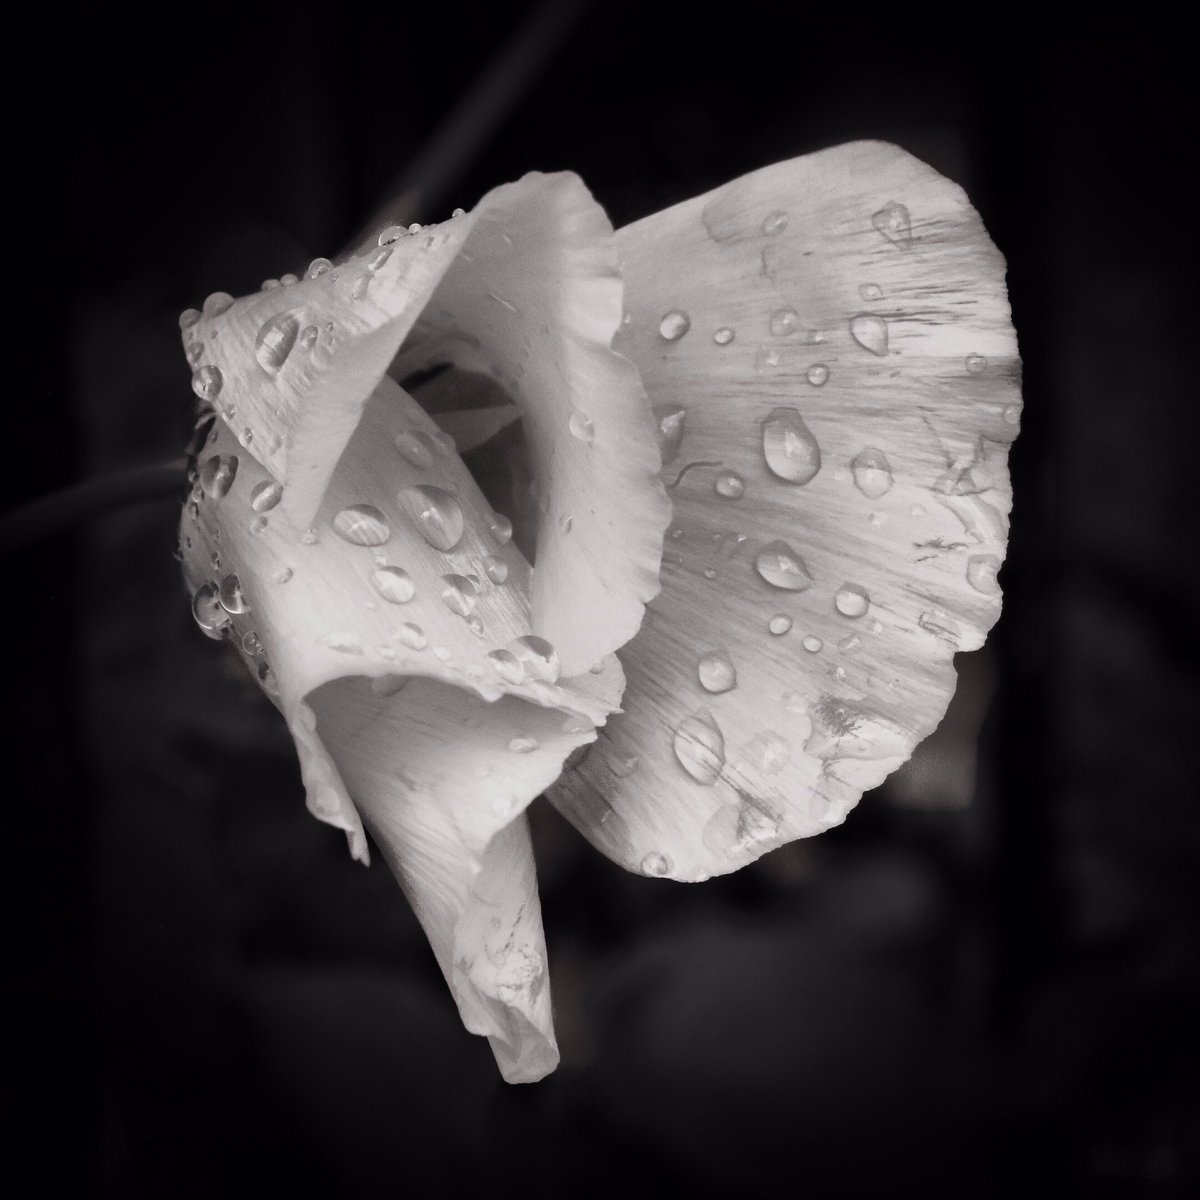 🤍🖤💦... fleeting adornment ...💦🖤🤍 #flowers #flora #water #drops #droplets #rain #summer #nature #monochrome #blackandwhite #stilllife #closeup #macro #details #beauty #life #silence #dream #imagination #magic #fairytale #imagination #peace #symbol #solitude #spell